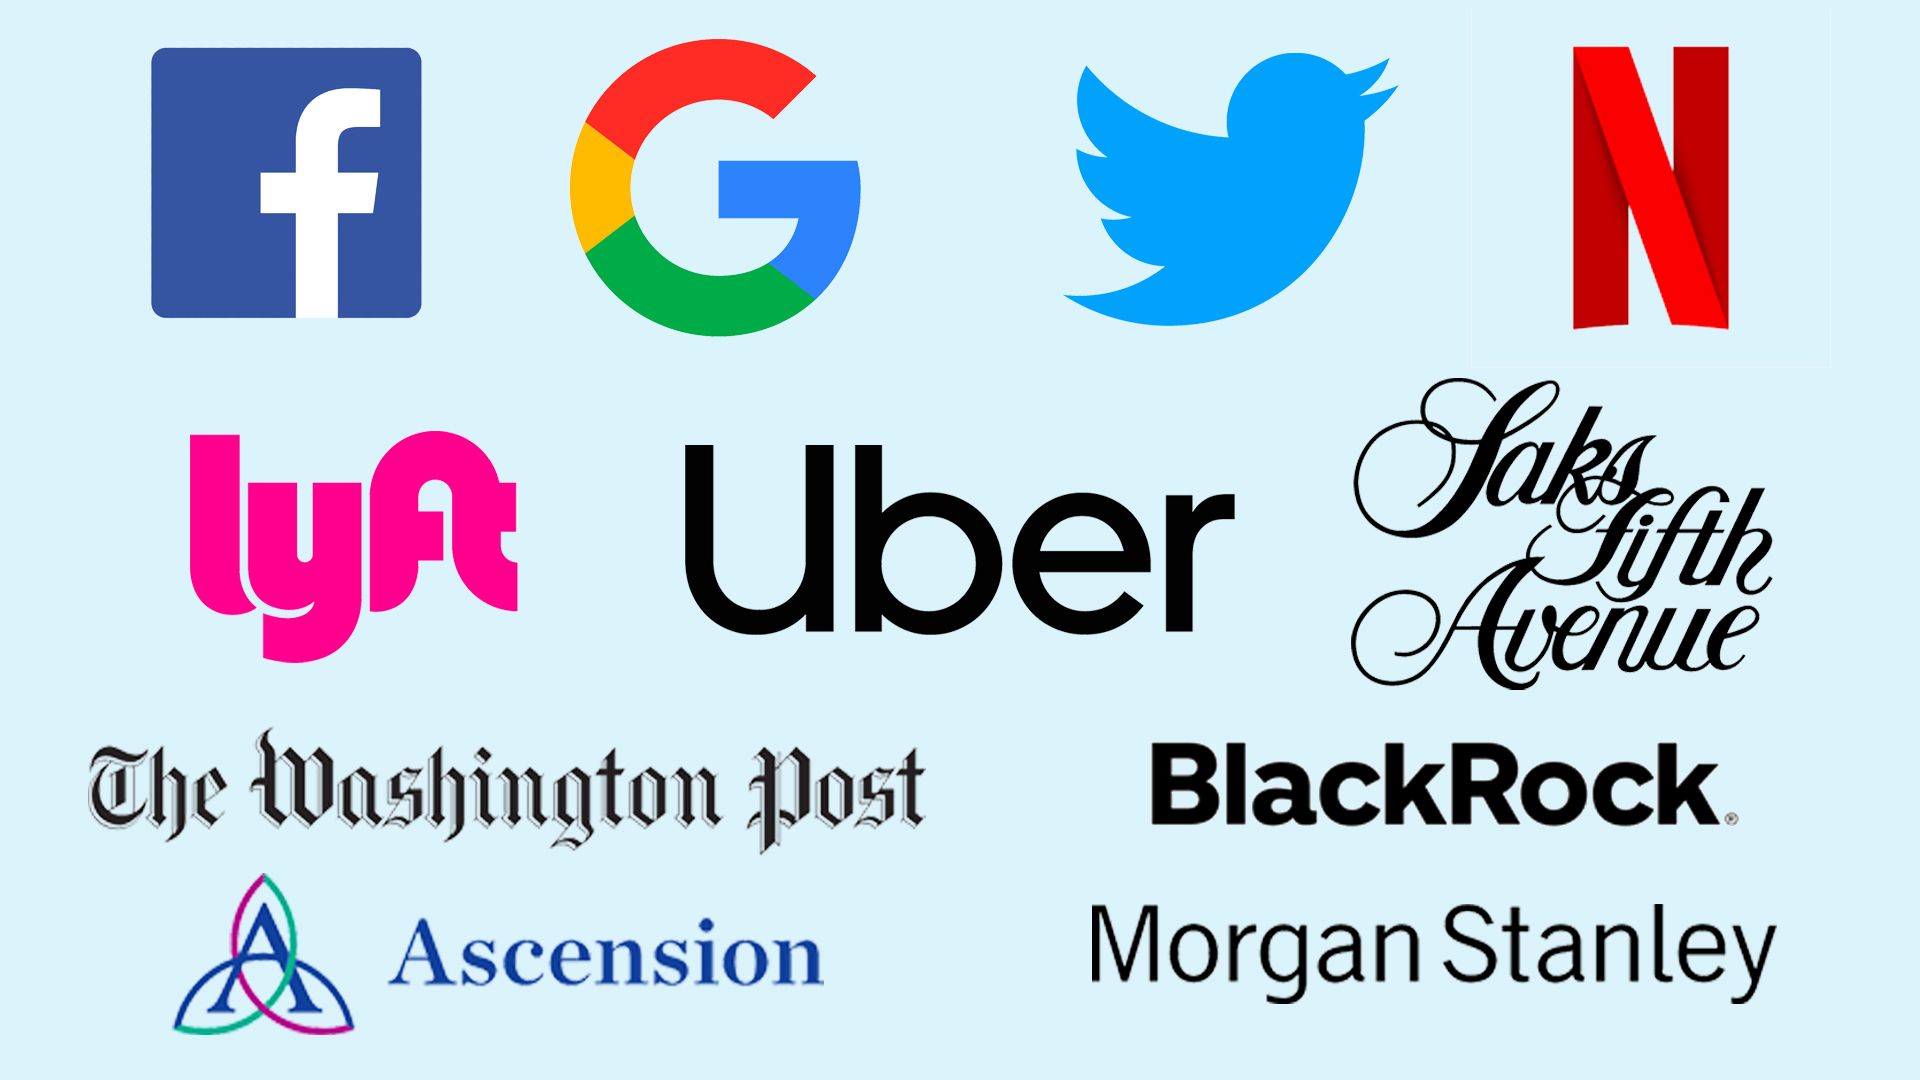 Illustration with the logos of Facebook, Google, Twitter, Netflix, Lyft, Uber, Saks Fifth Avenue, The Washington Post, blackRock, Ascension and Morgan Stanley